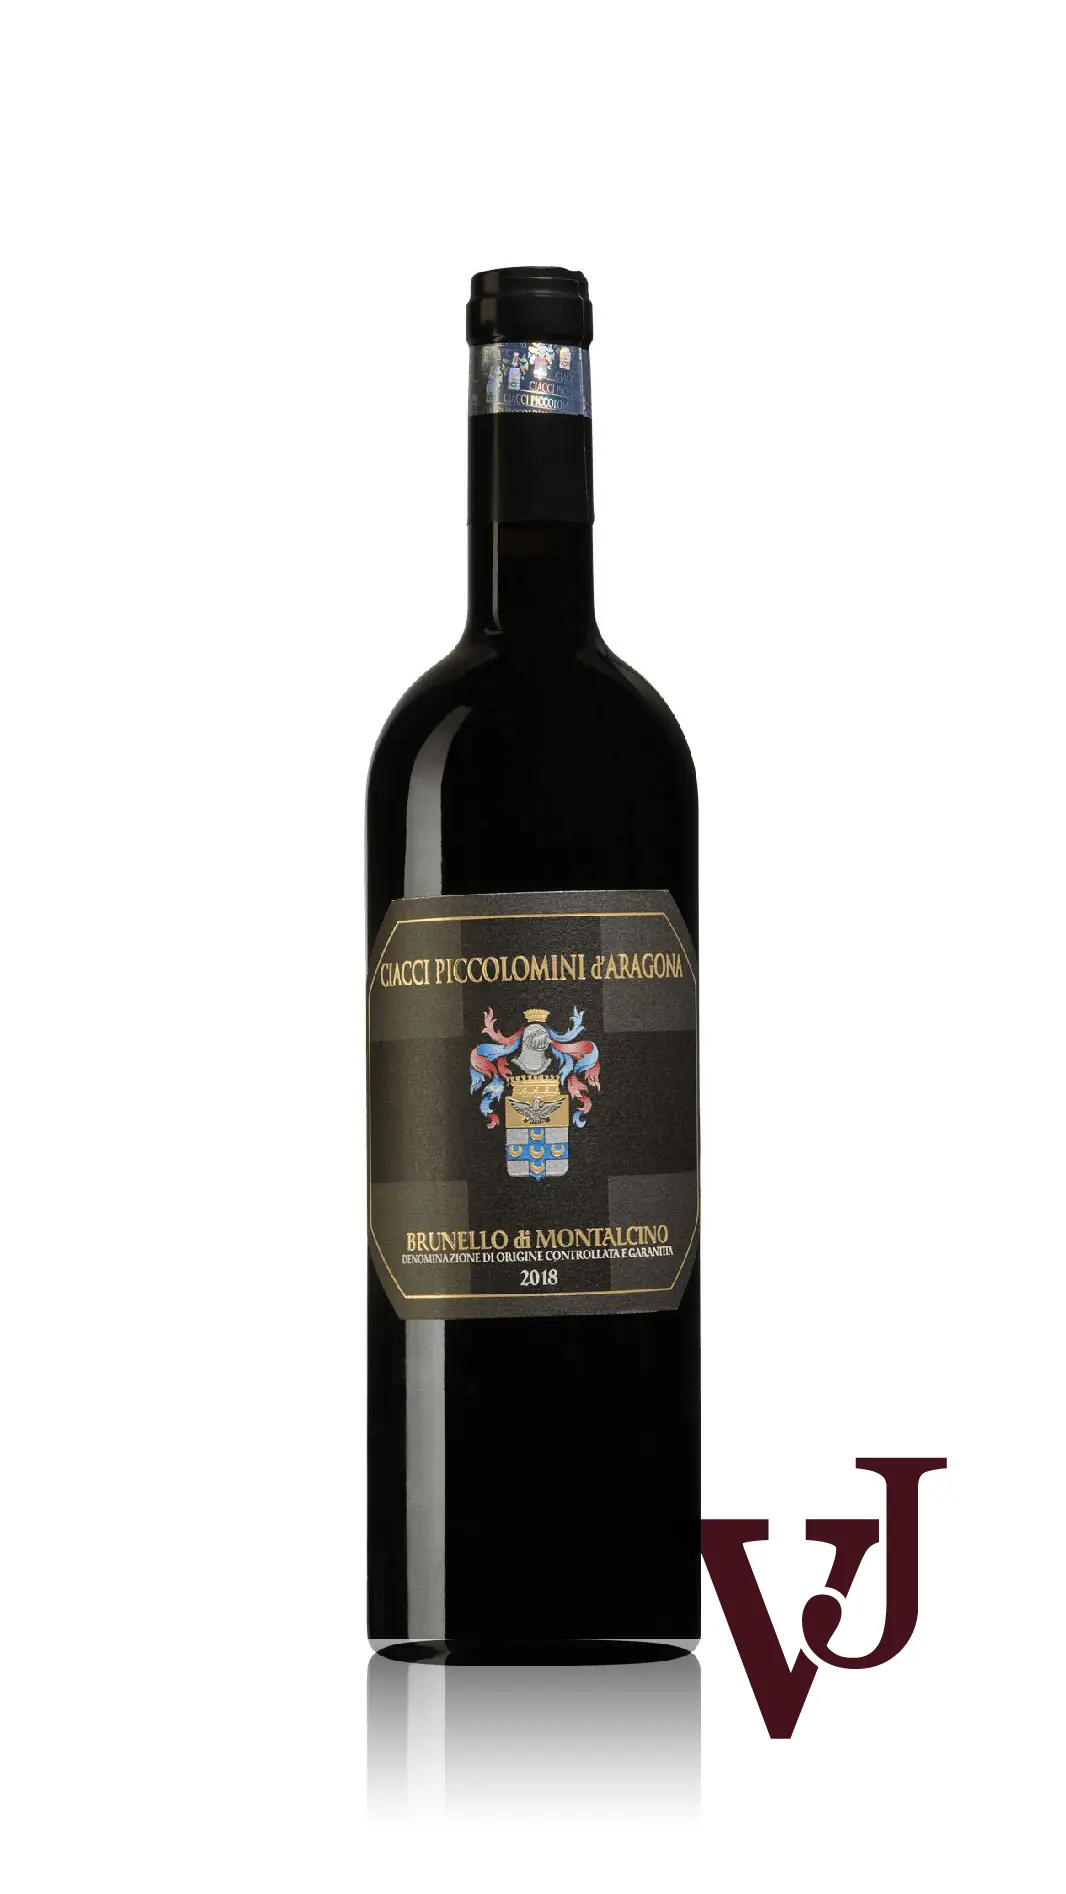 Rött Vin - Brunello di Montalcino Ciacci Piccolomini artikel nummer 9567301 från producenten Ciacci Piccolomini från området Italien - Vinjournalen.se